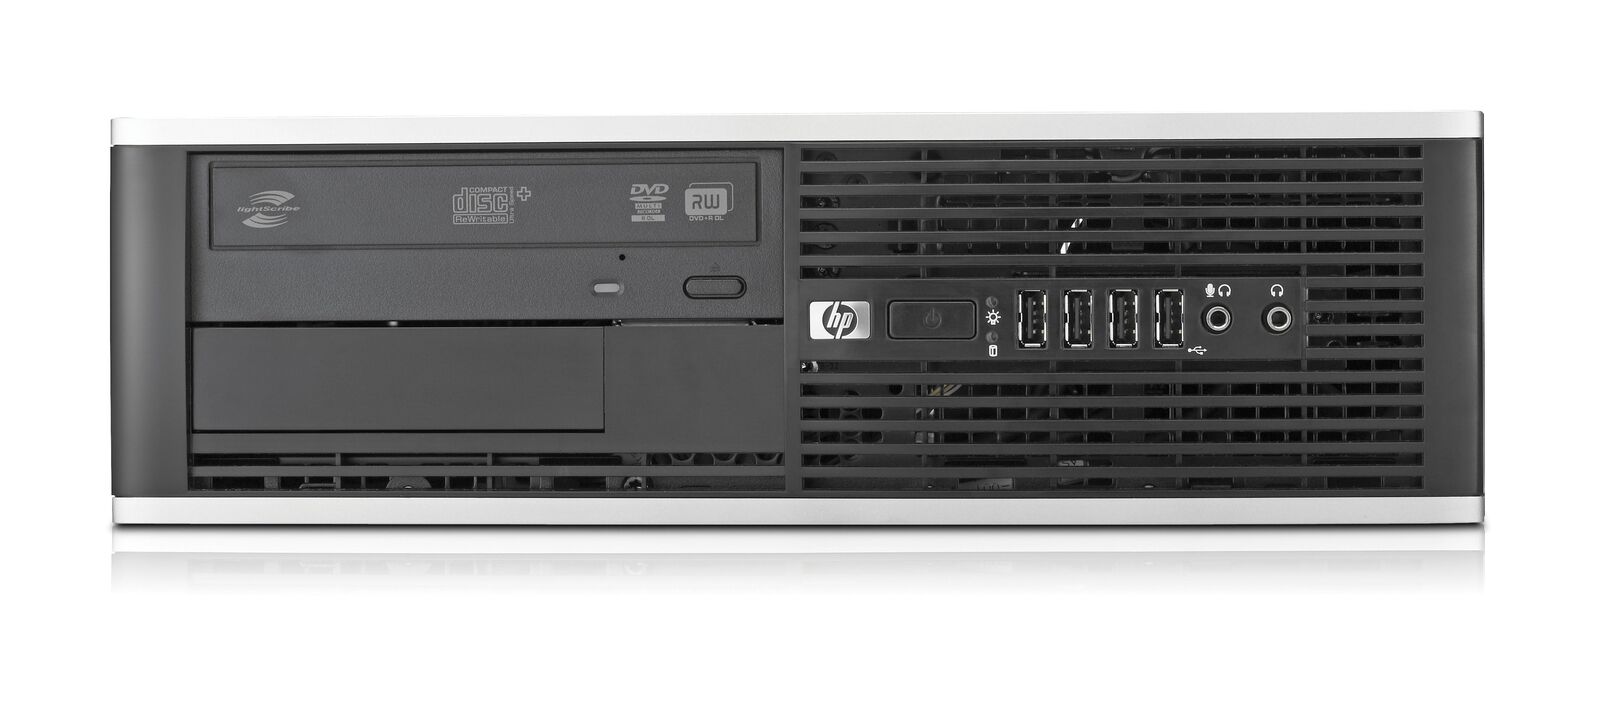 HP 6005 SFF Desktop PC - AMD B24 3.0Ghz - 2GB RAM - 160GB HDD - DVDR - Win7